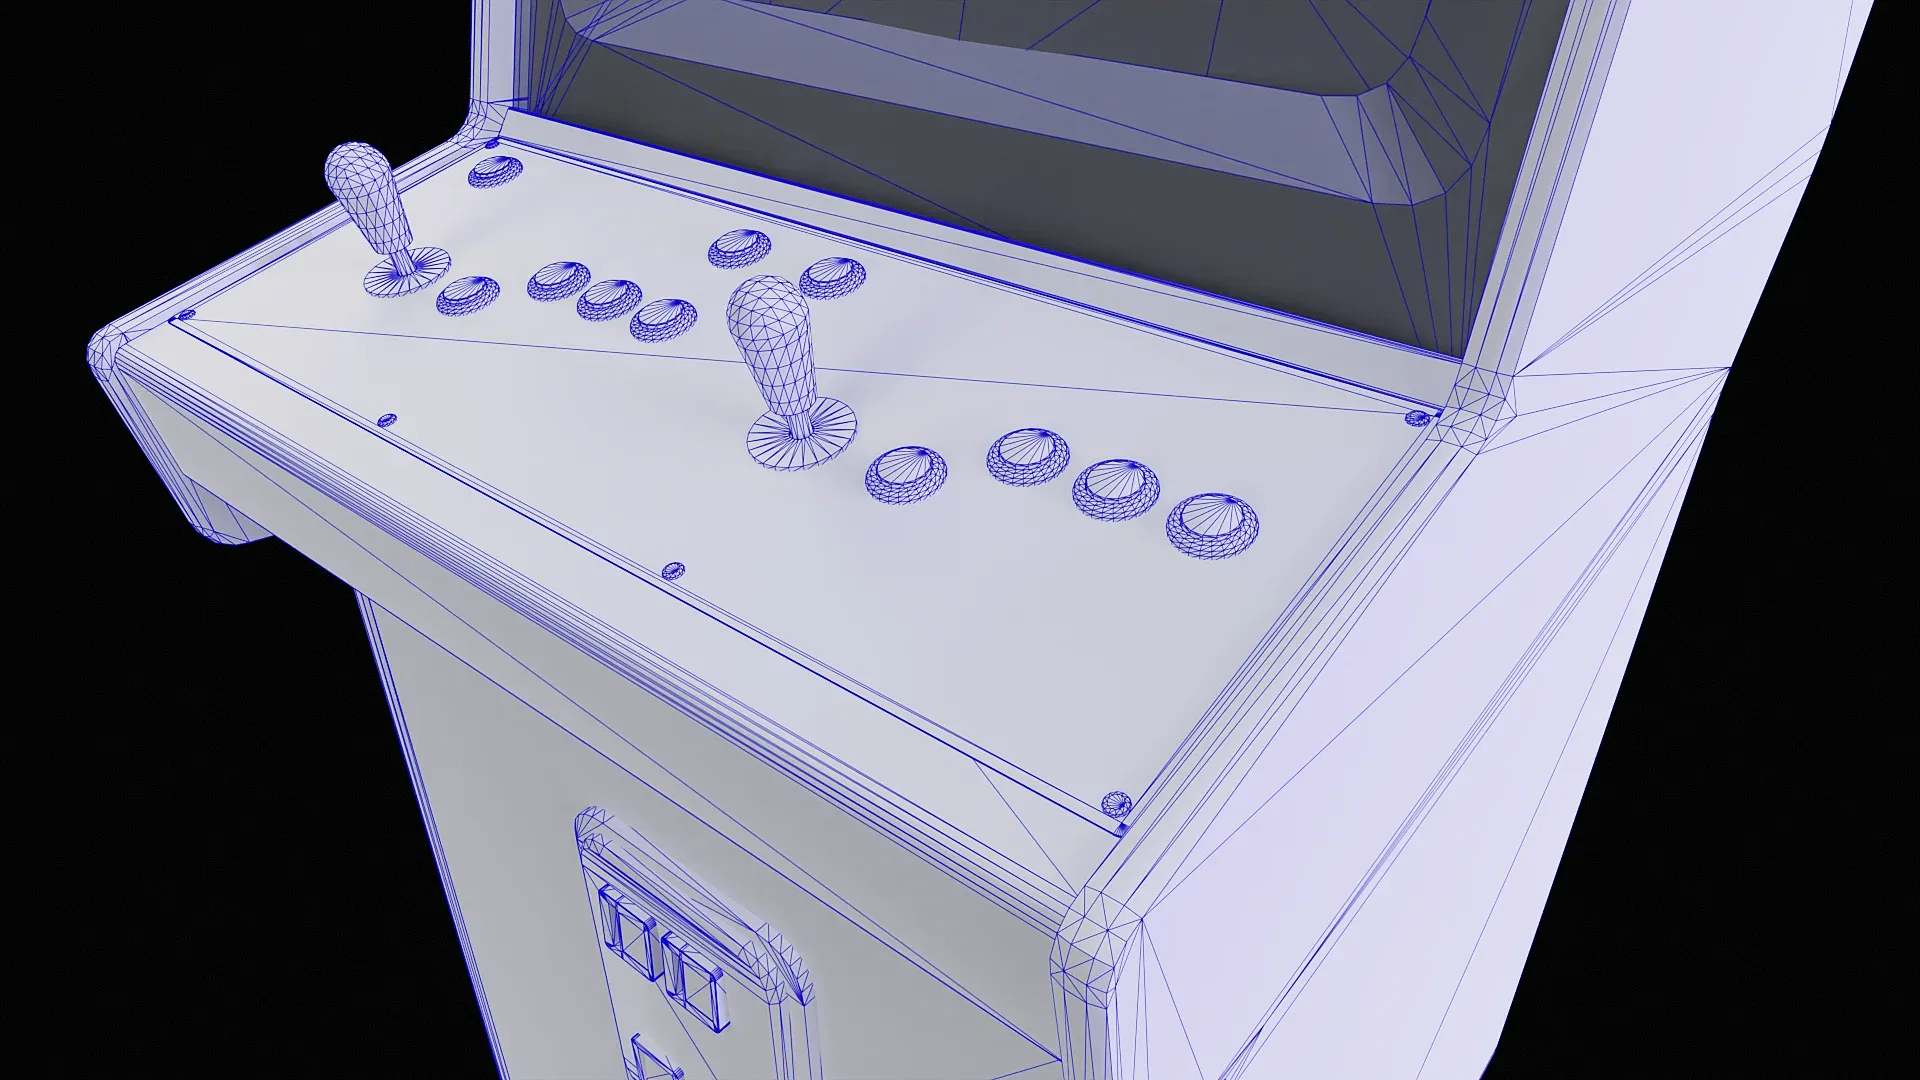 Neo Geo MVS-2 Upright Arcade Gaming Cabinet  - Low Poly PBR UE